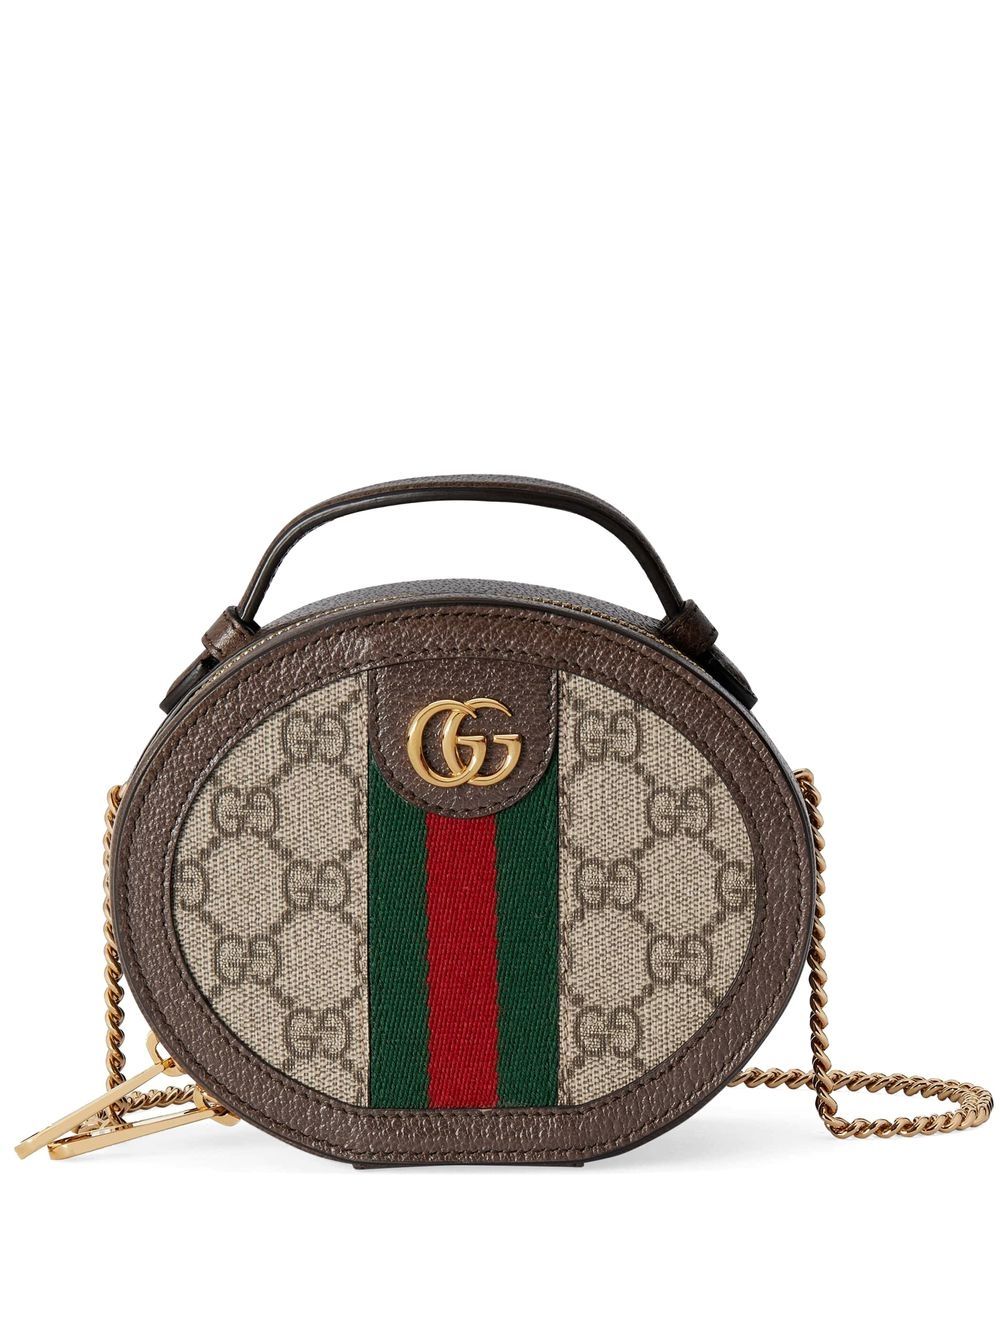 Gucci GG Supreme Canvas Ophidia Suitcase - Neutrals